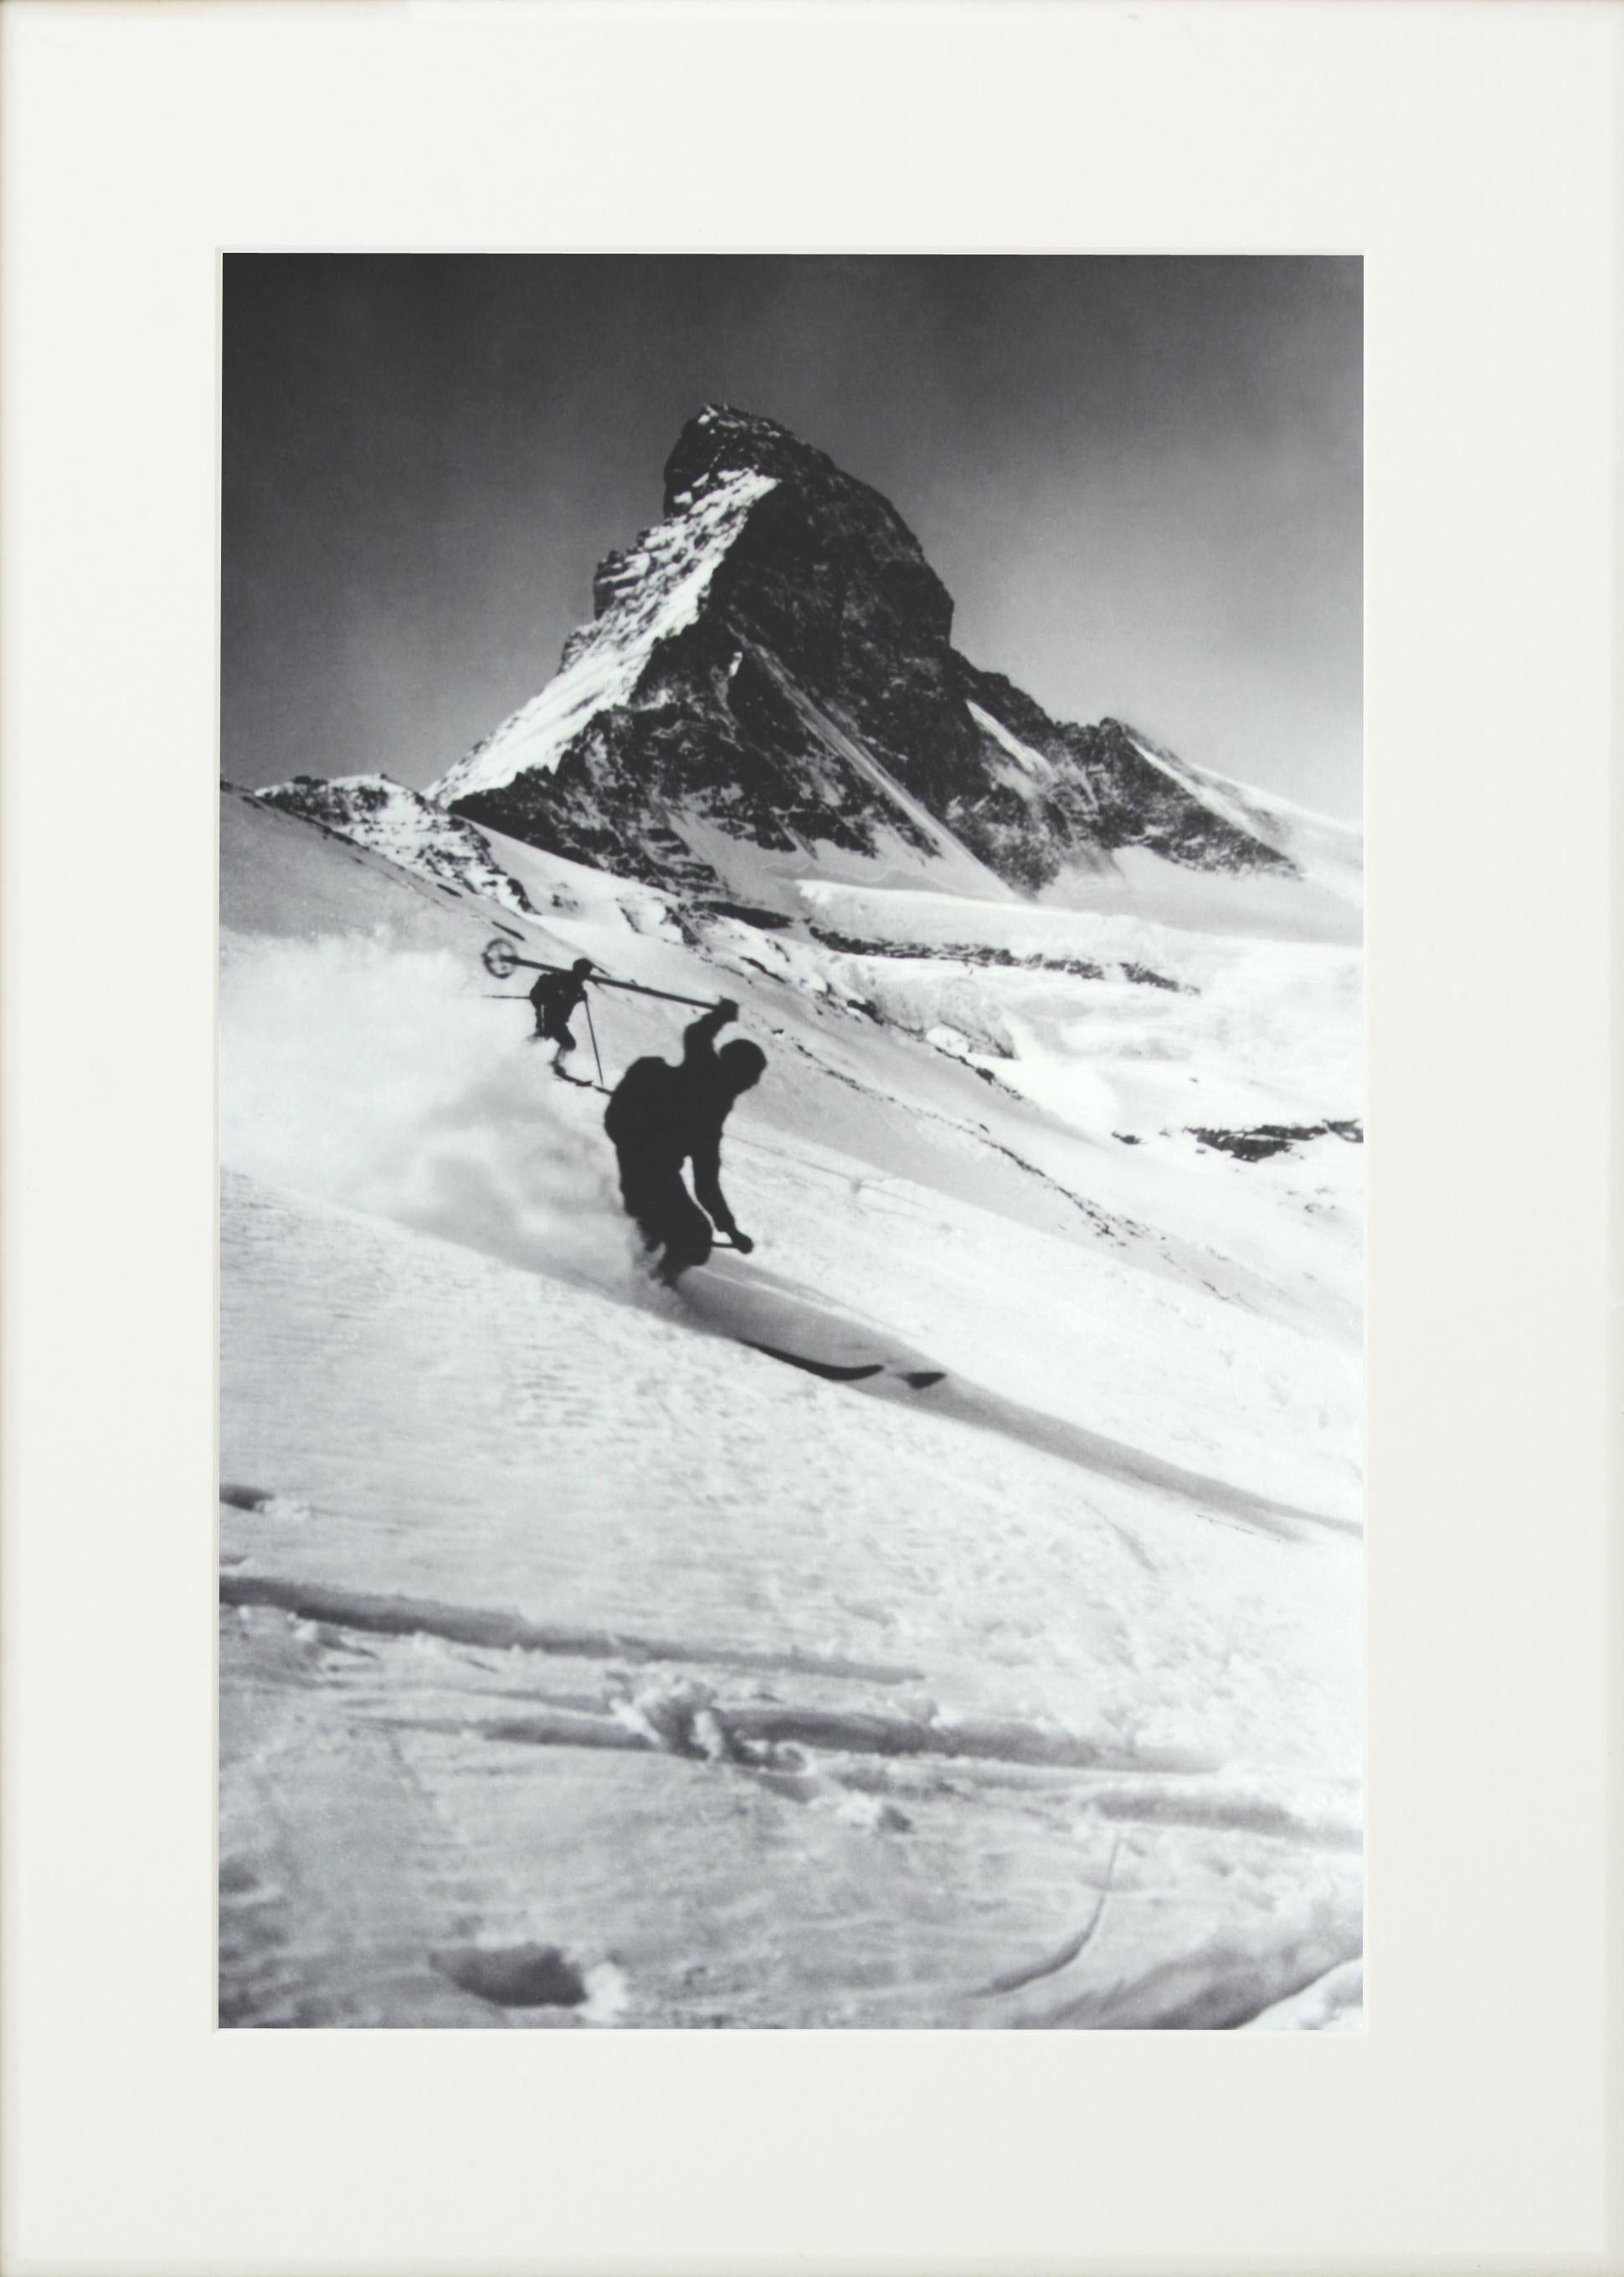 Sporting Art Alpine Ski Photograph 'Matterhorn & Skiers', Taken from Original 1930s Photo For Sale